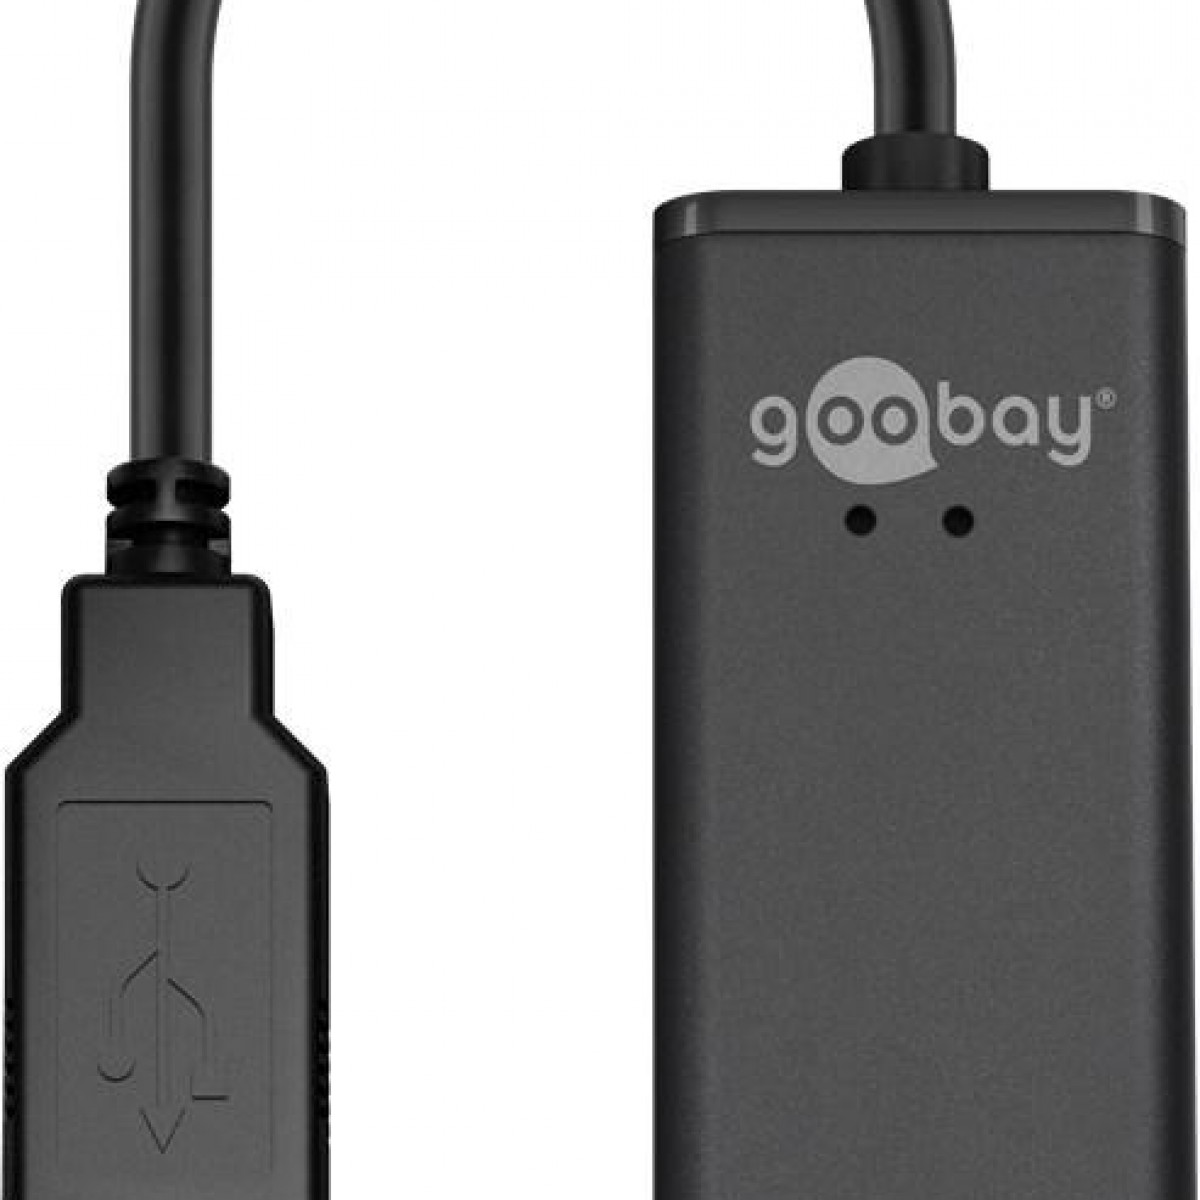 GOOBAY Netzwerkkonverter Netzwerkkonverter Fast USB 2.0 Ethernet